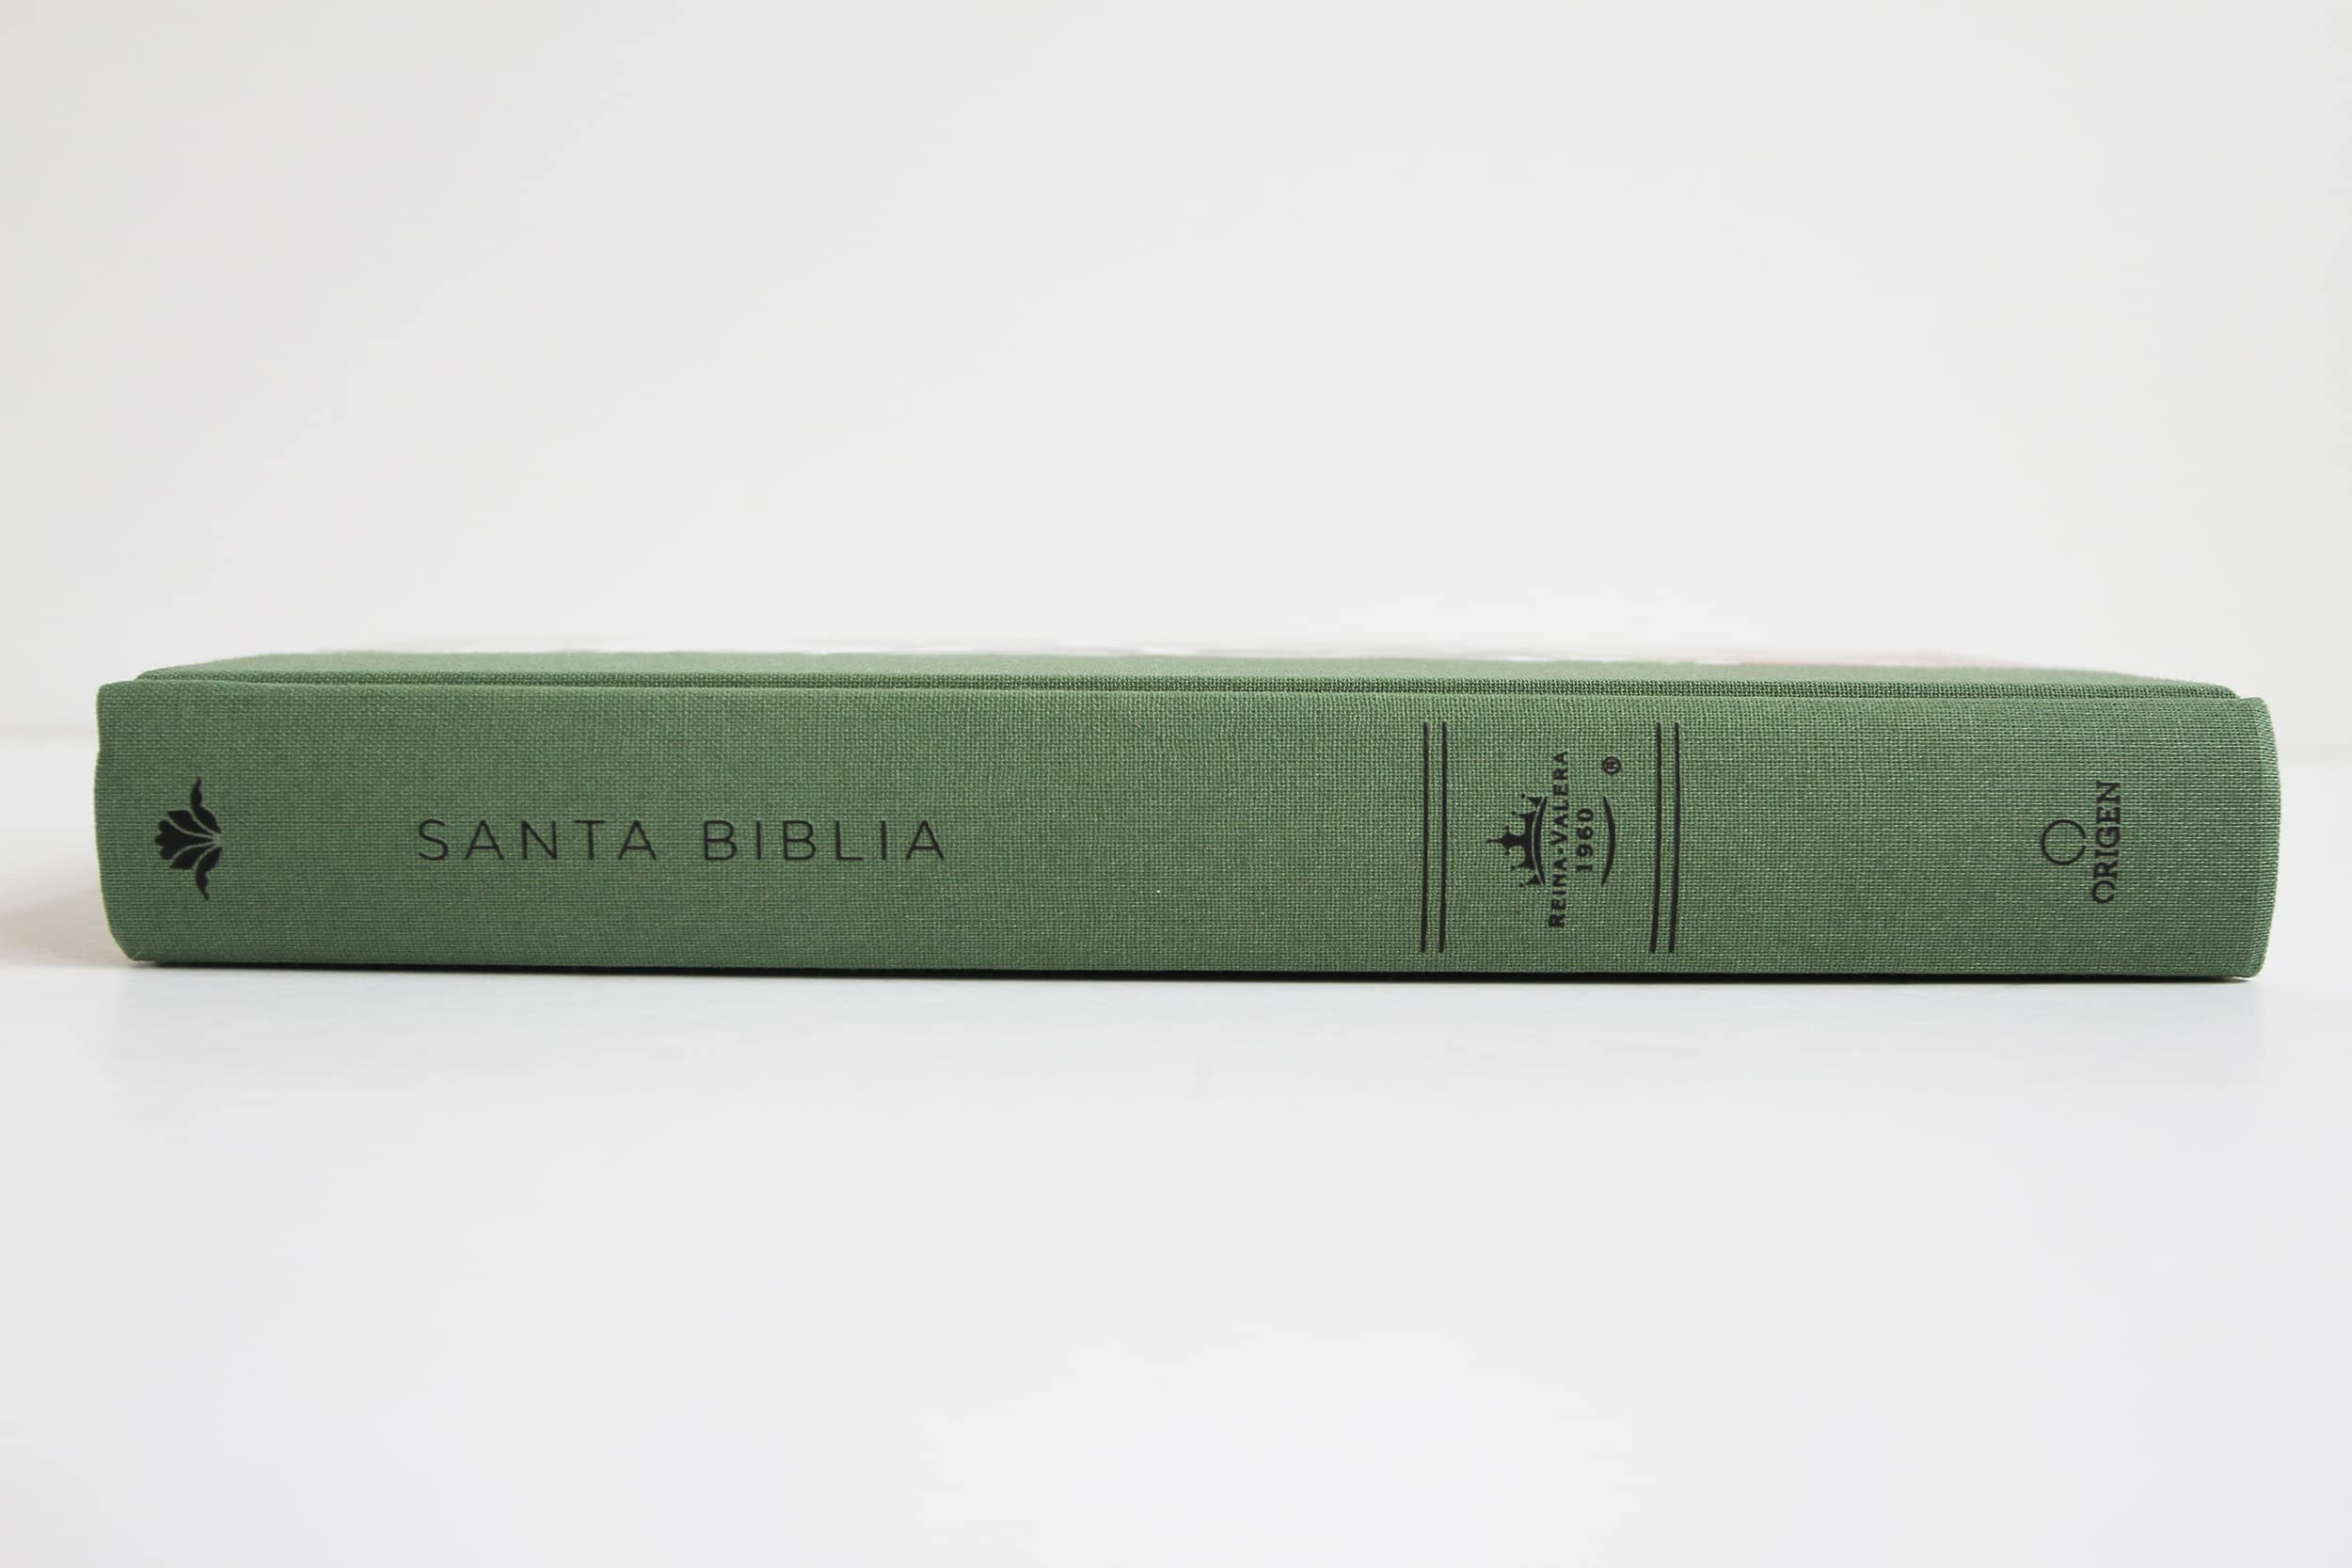 Biblia RVR 1960 letra grande Tapa dura y tela verde con flores tamaño manual / B ible RVR 1960 Handy Size Large Print Hardcover Cloth with Green Floral